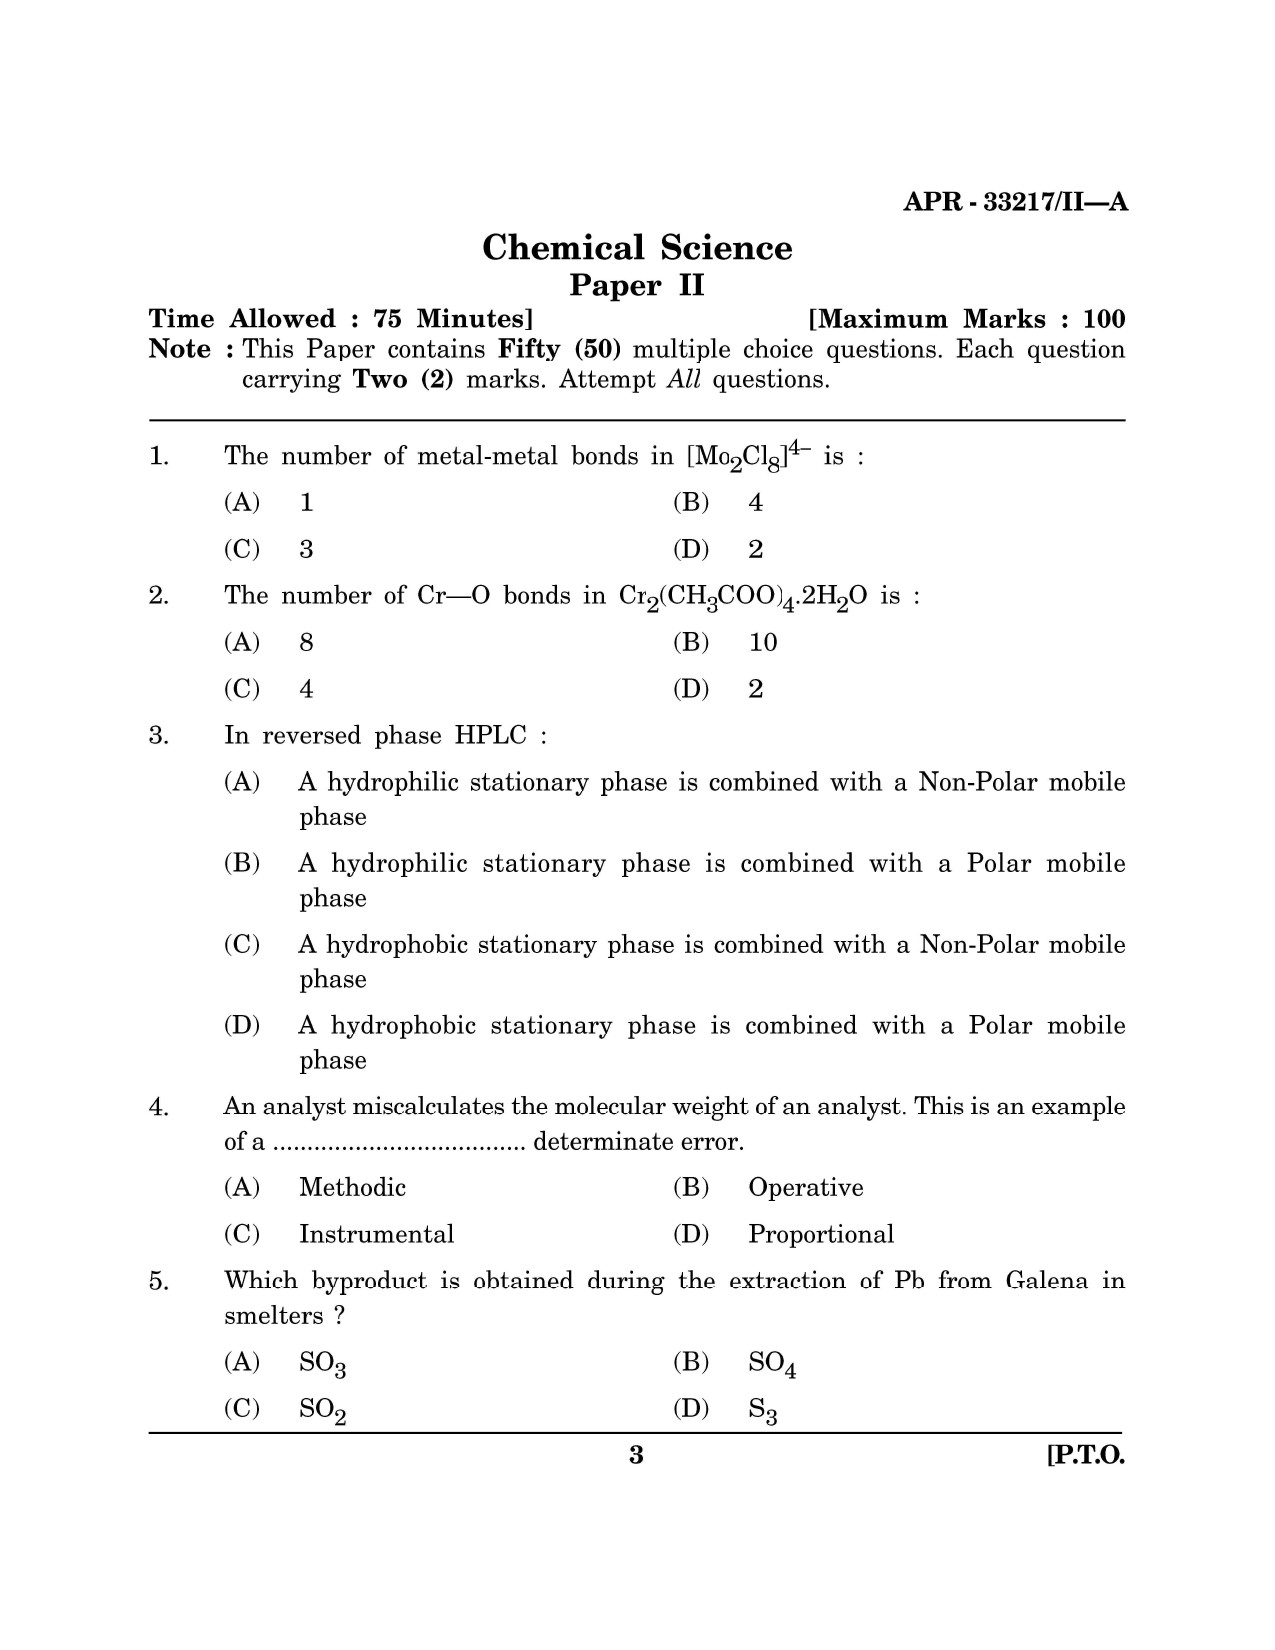 Maharashtra SET Chemical Sciences Question Paper II April 2017 2